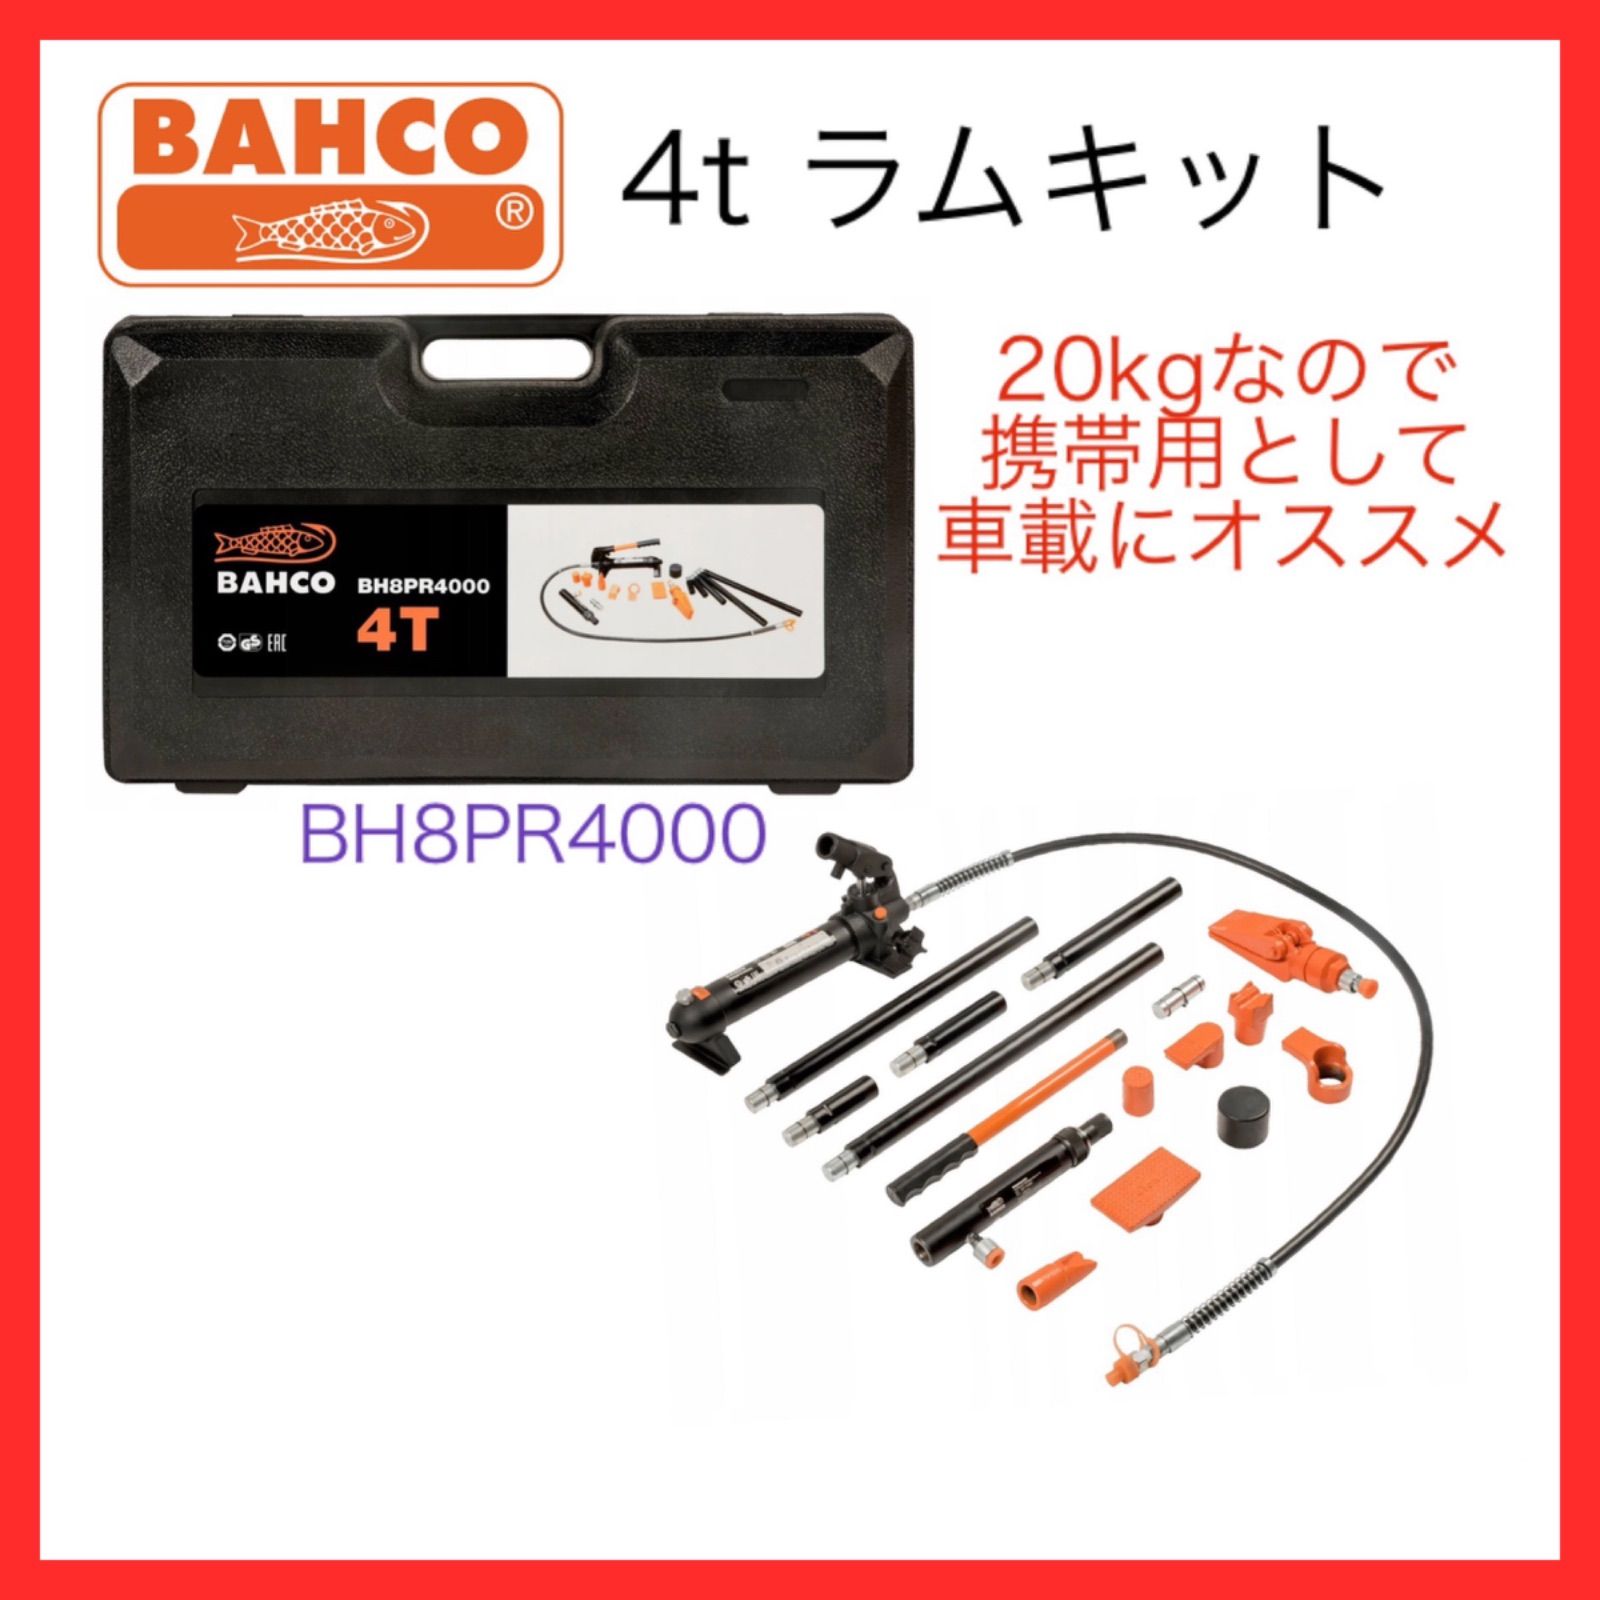 BAHCO(バーコ) Portable Ram Kit 携帯用ラムキット 4.0t BH8PR4000